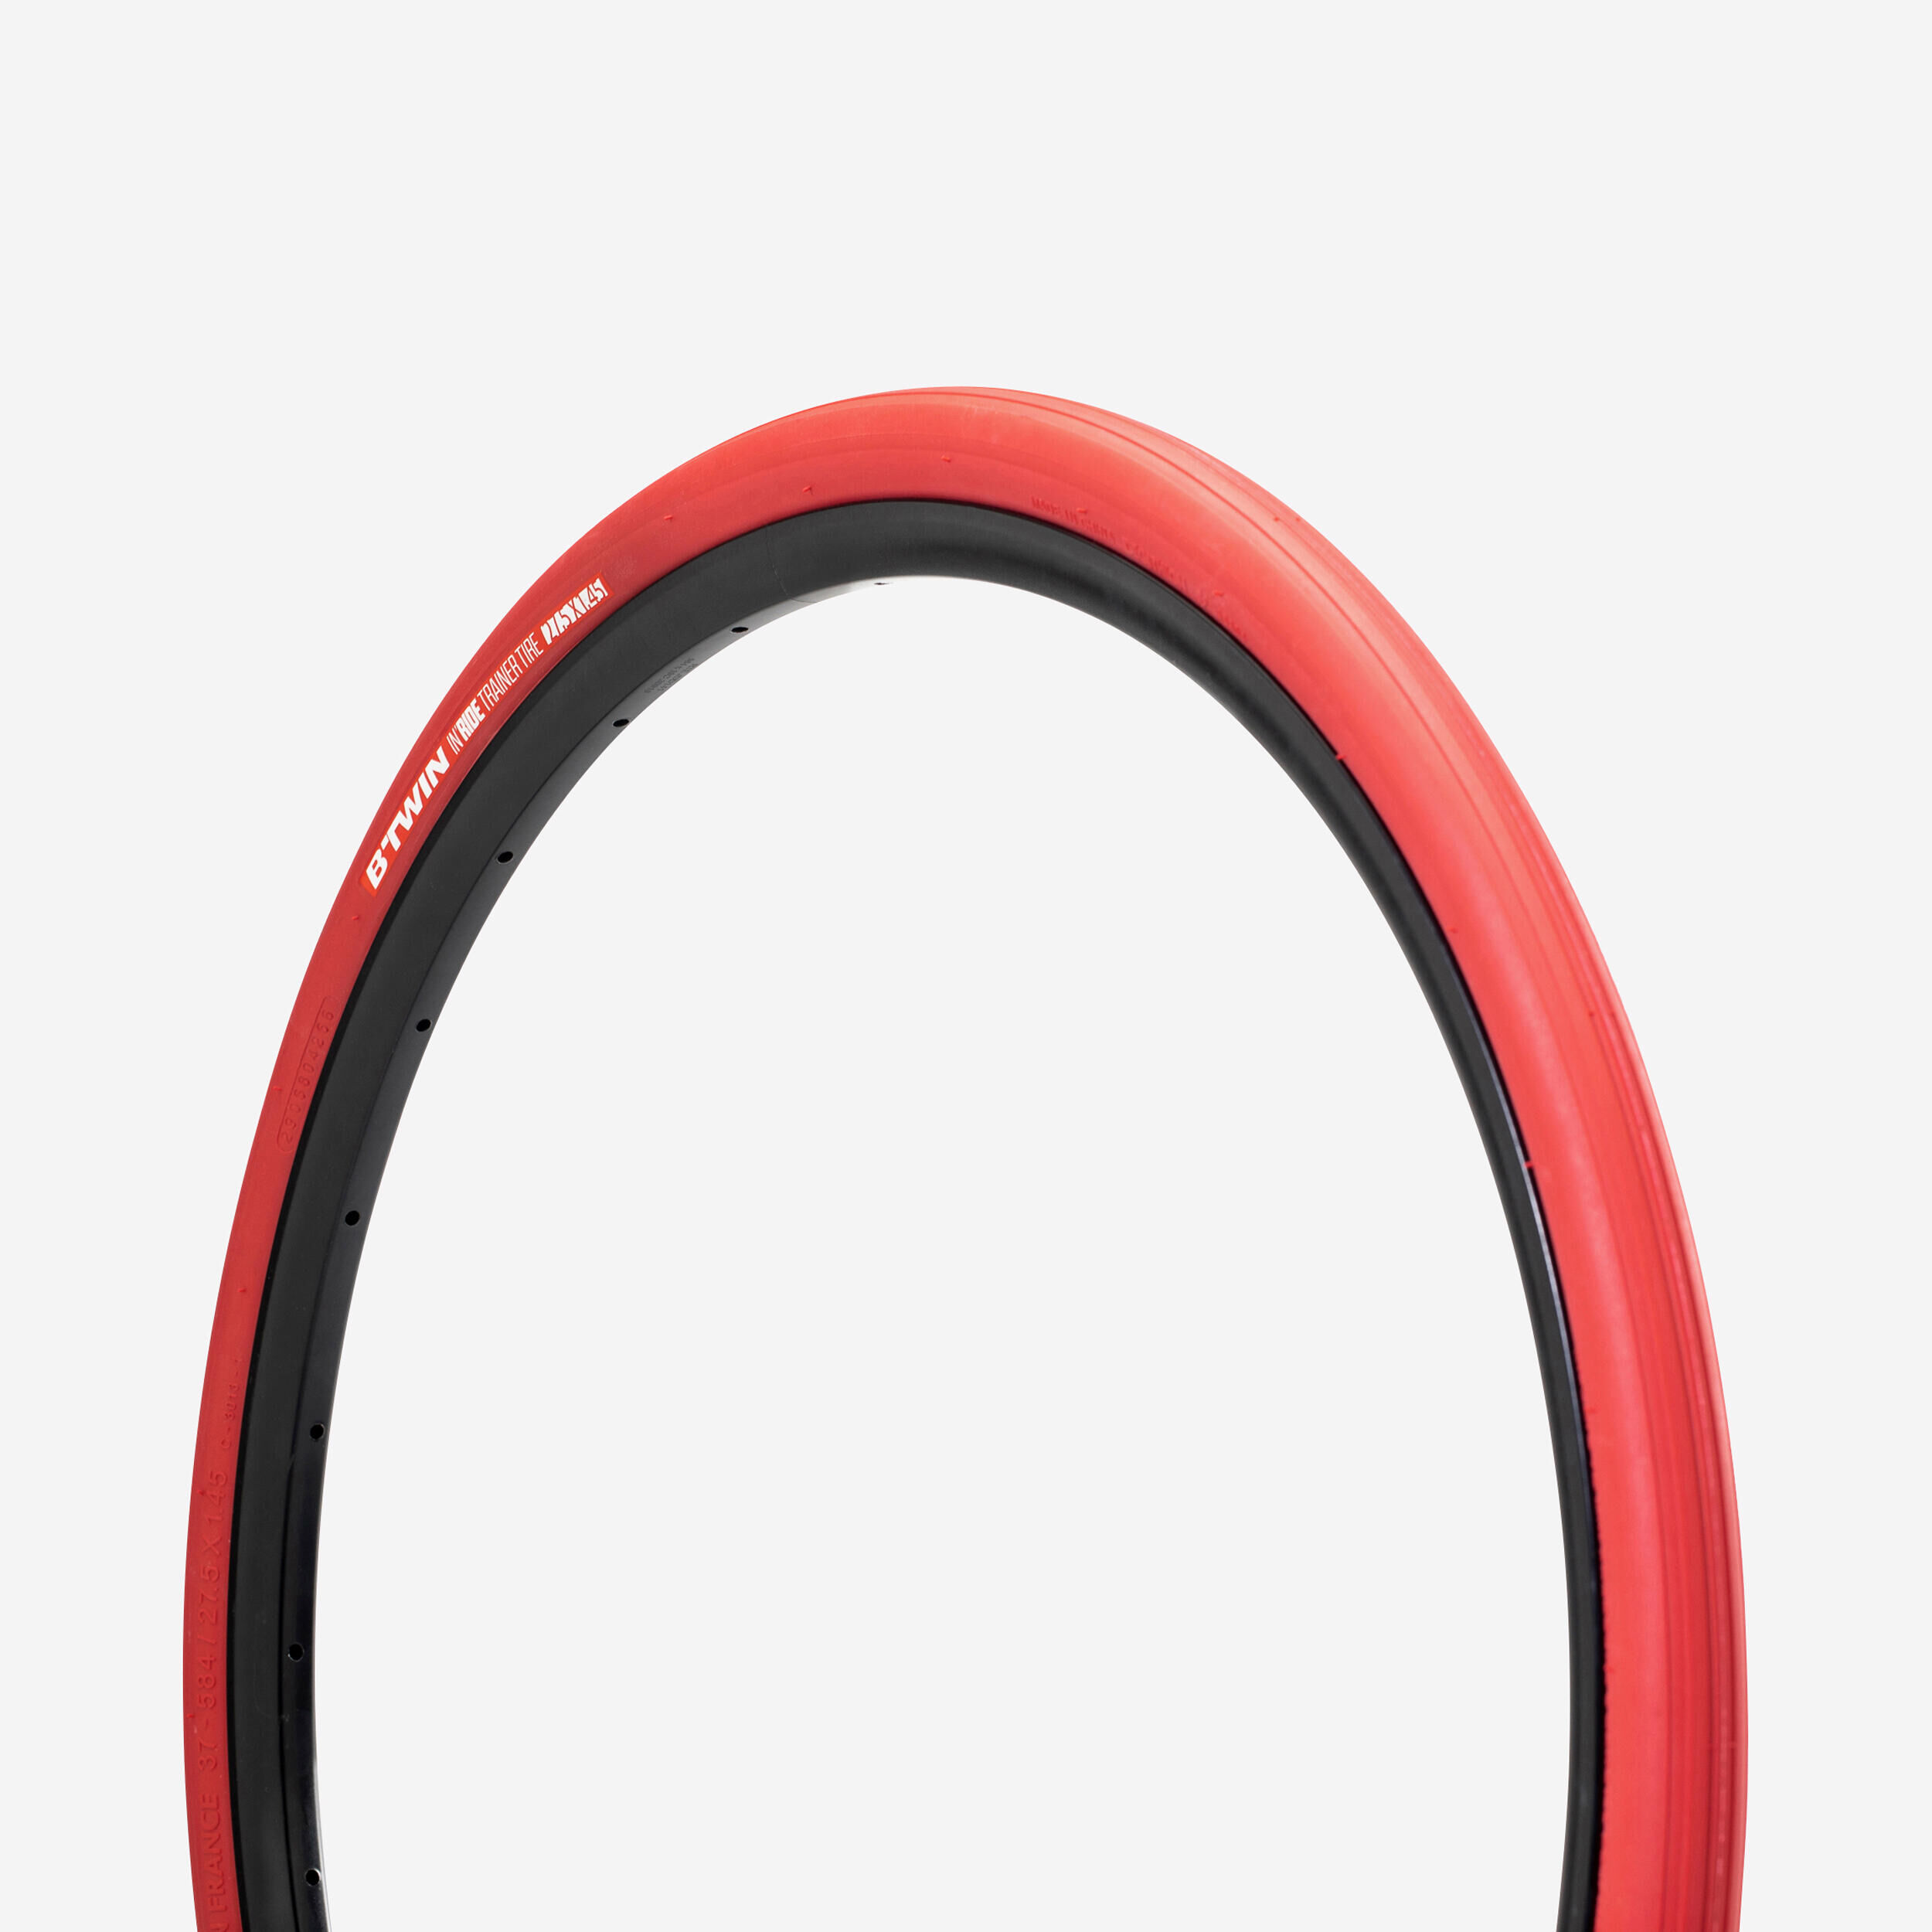 VAN RYSEL In’Ride Home Trainer Tyre 27.5x1.45